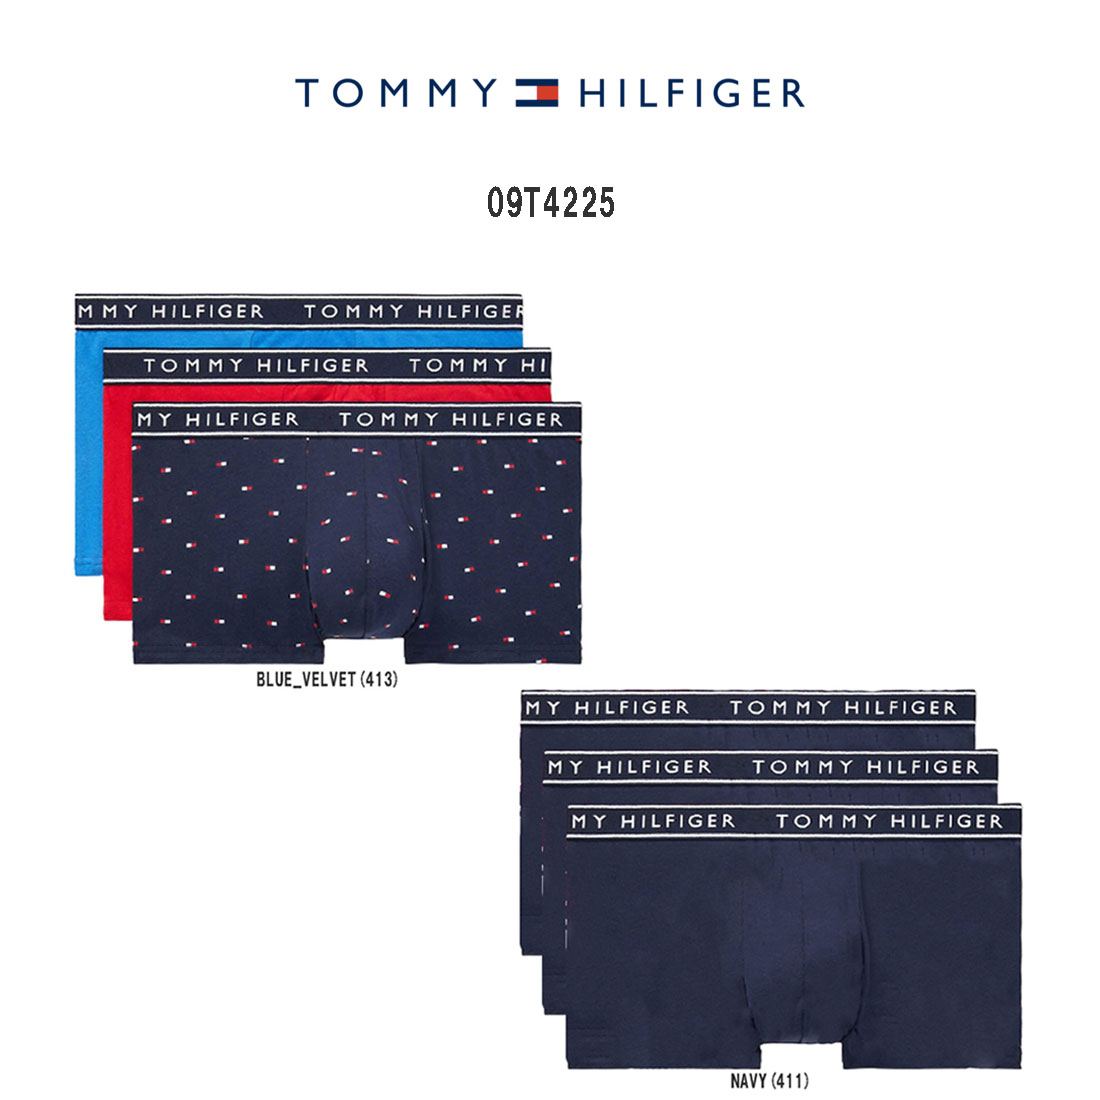 Tommy Hilfiger TOMMY HILFIGER(トミーヒルフィガー)ショート ボクサーパンツ メンズ アンダーウェア パック 前閉じ 男性 下着 3枚セット 09T4225